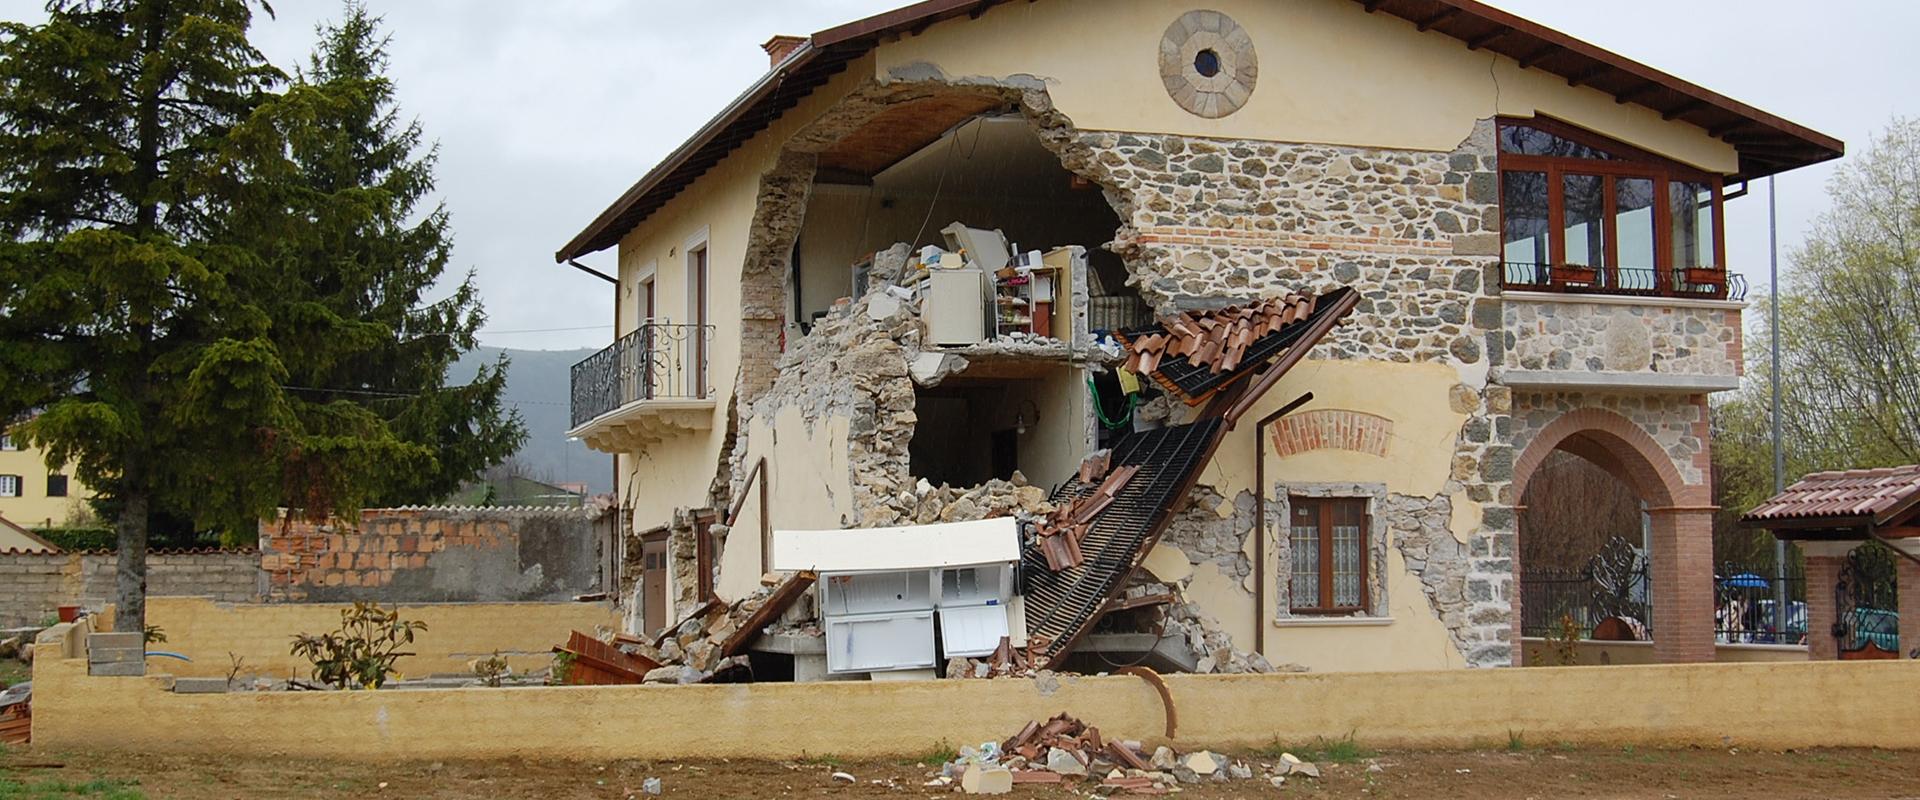 Example of damage - L'Aquila earthquake, Italy